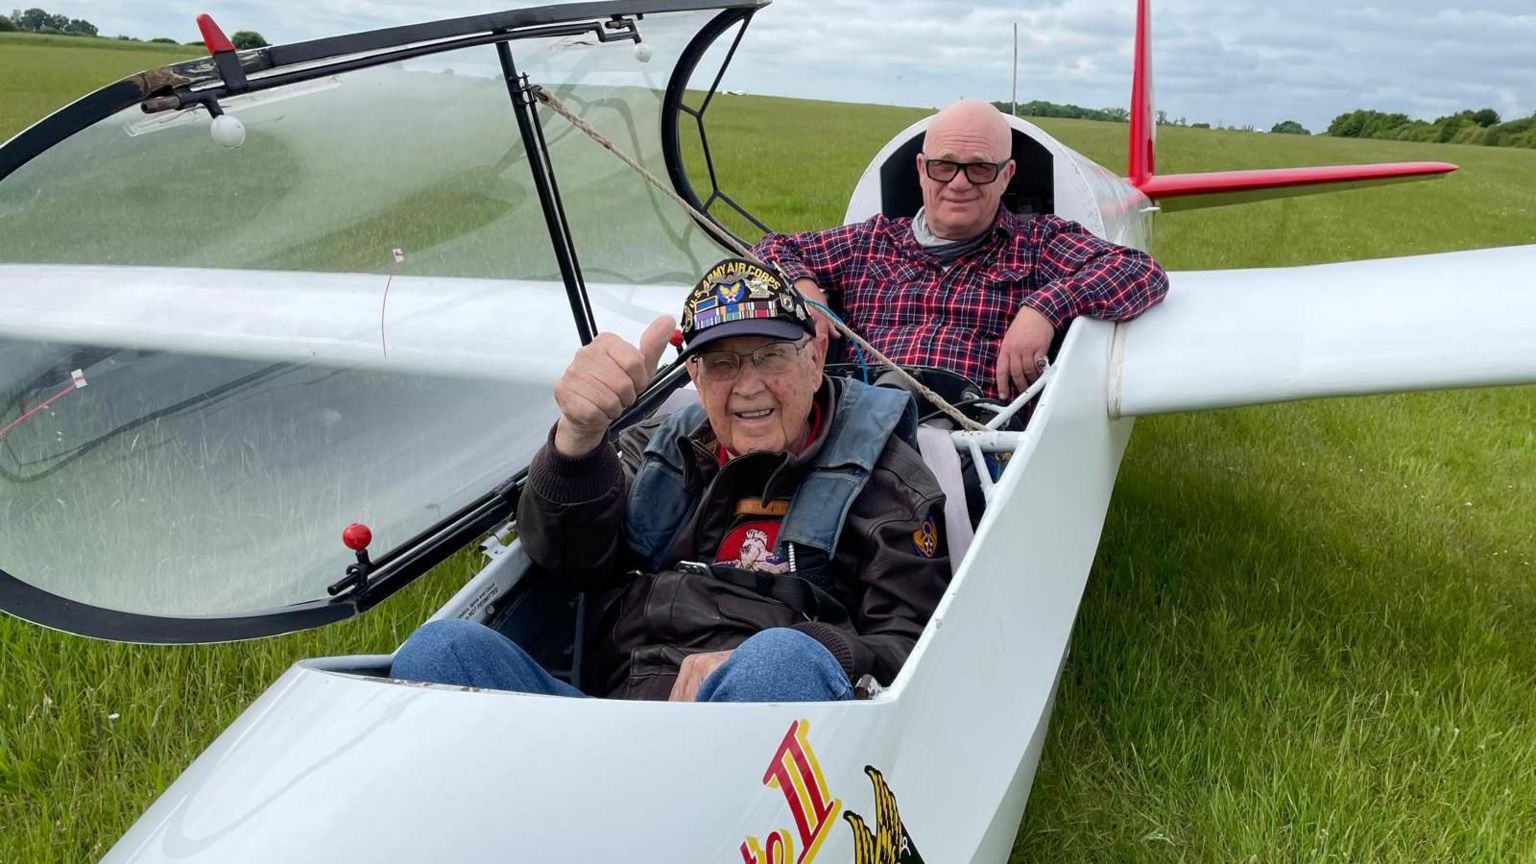 Casey Bukowski and his friend Jared Cummings in a plane in Essex